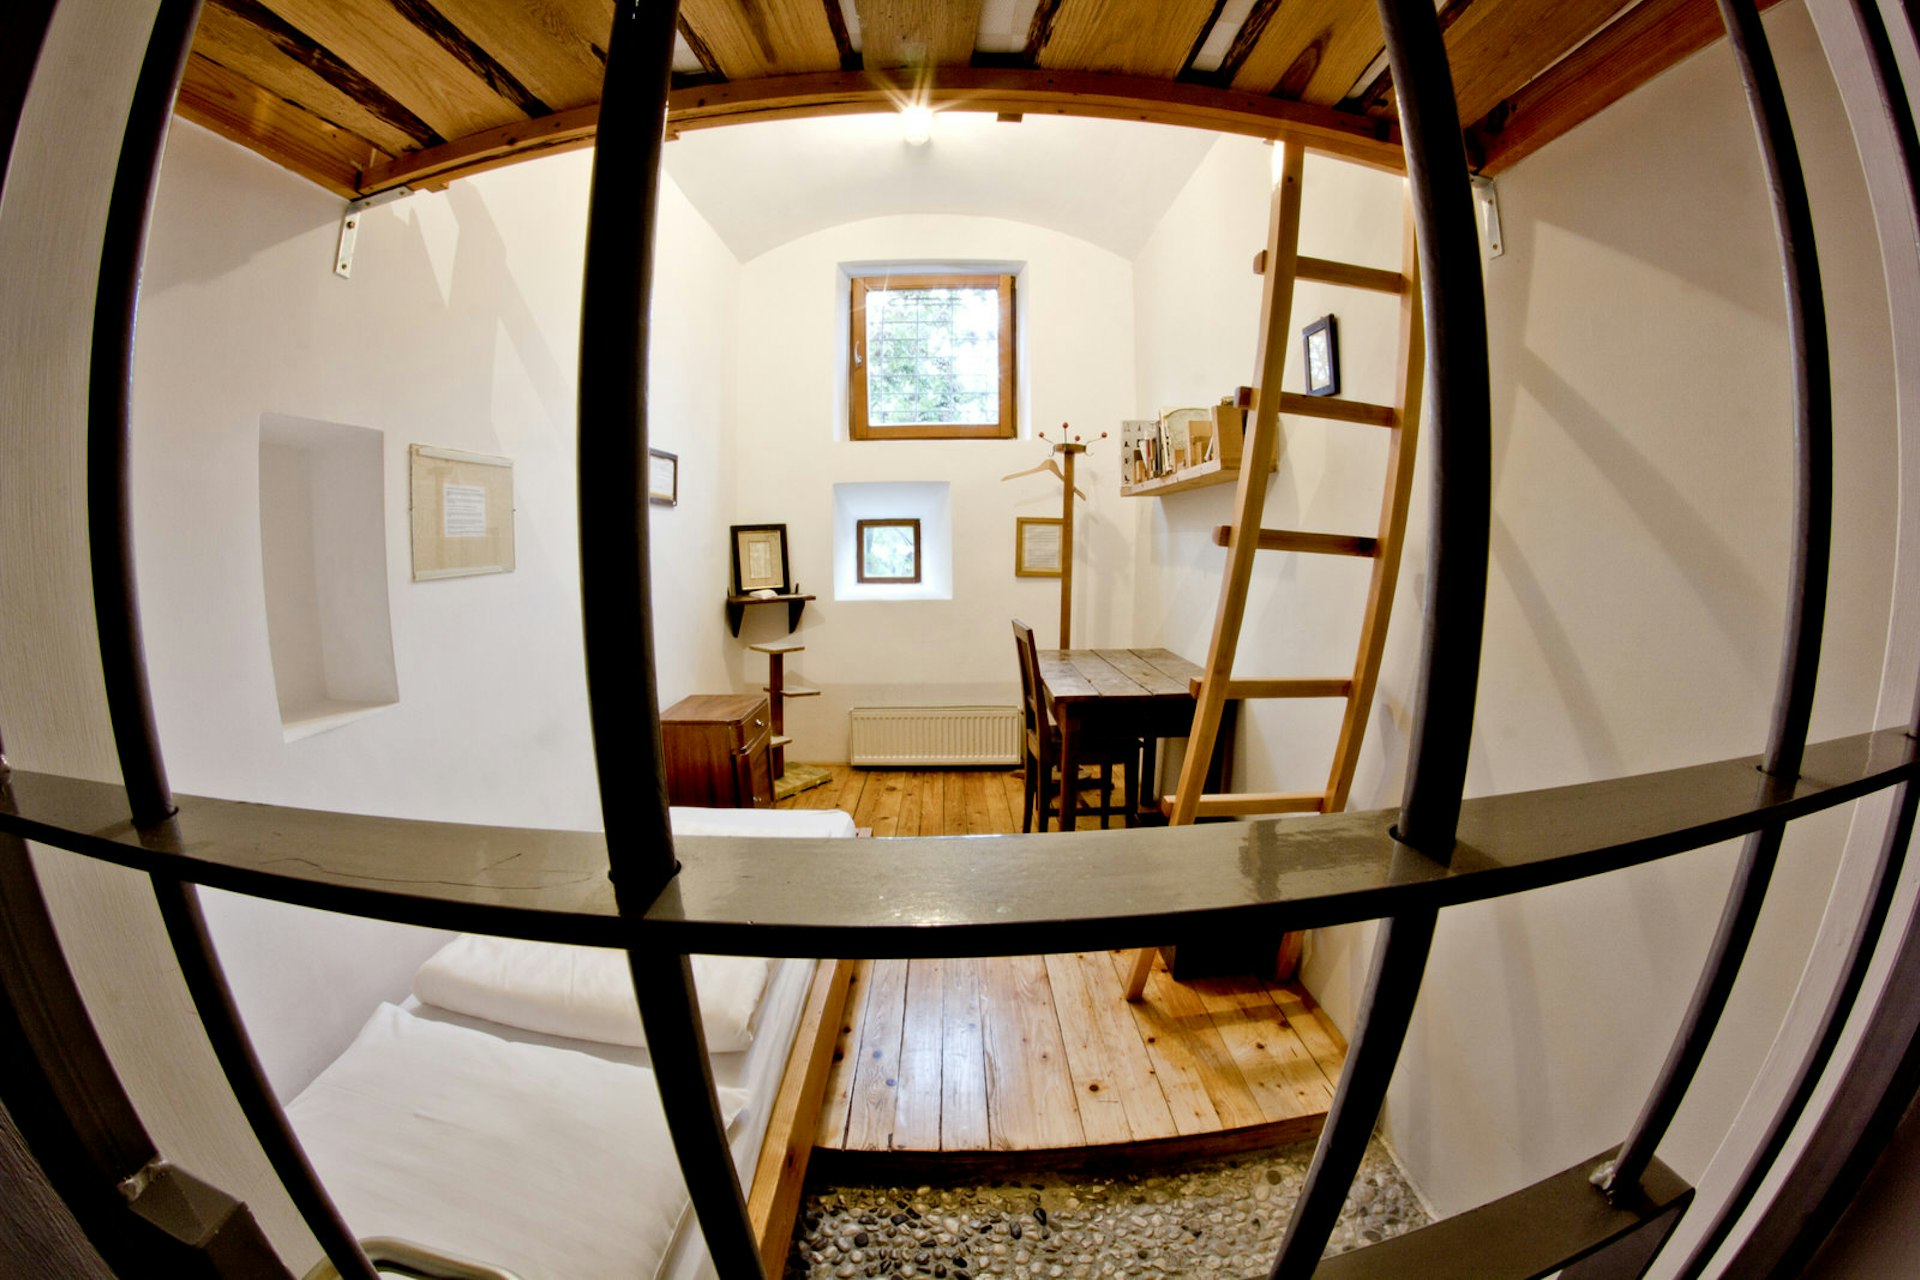 A former prison cell is now a hostel room at Celica Hostel © Žiga Okorn